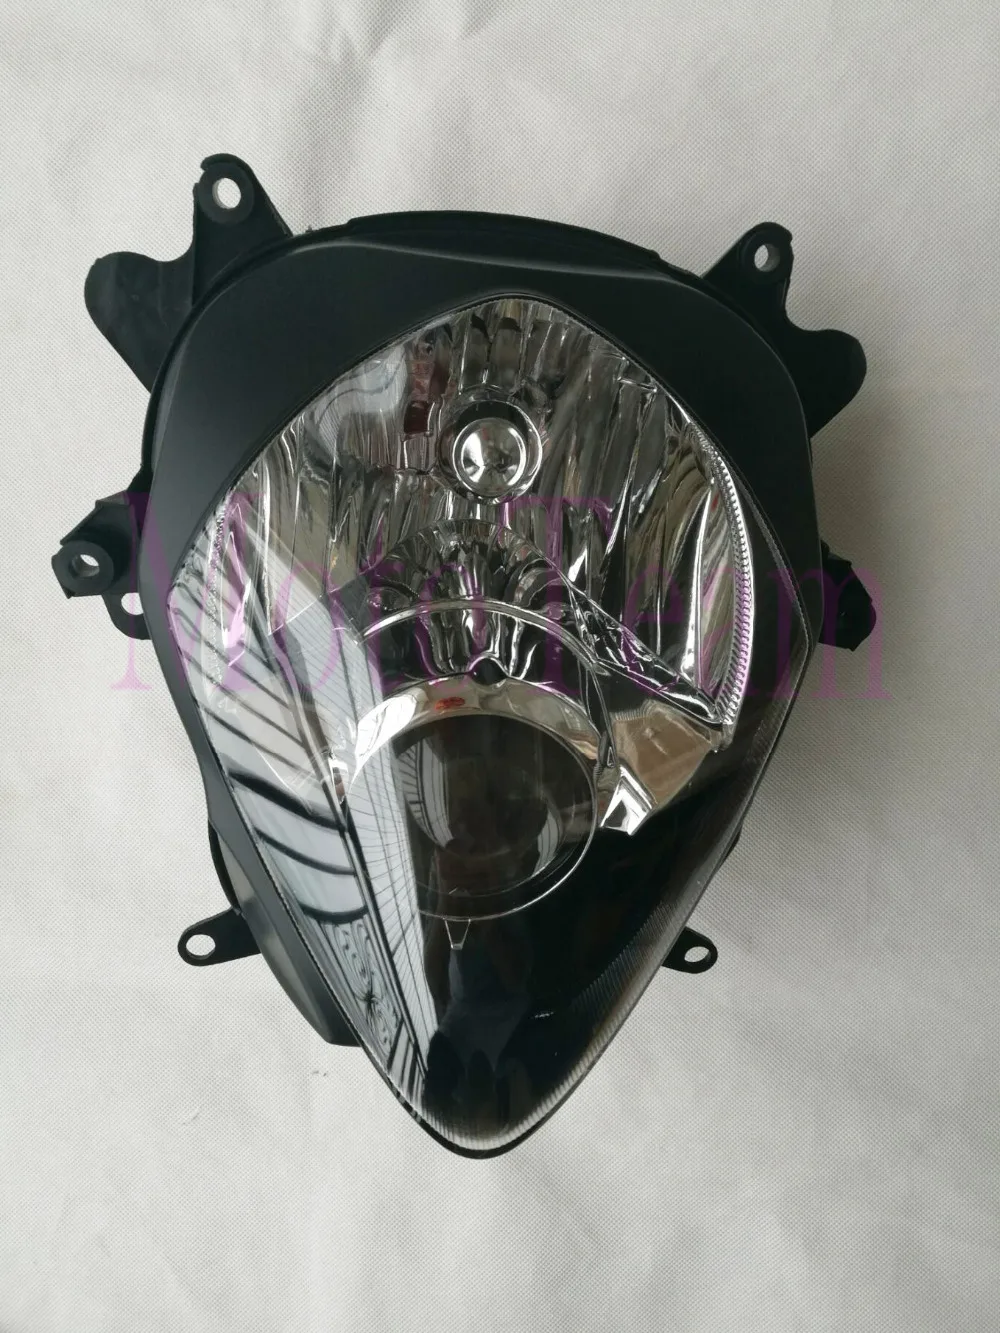 

New For SUZUKI GSX-R1000 GSXR1000 GSXR 1000 k7 2007 2008 07 08 Motorcycle Headlight Replace Headlamp Lighting Lamp Clear